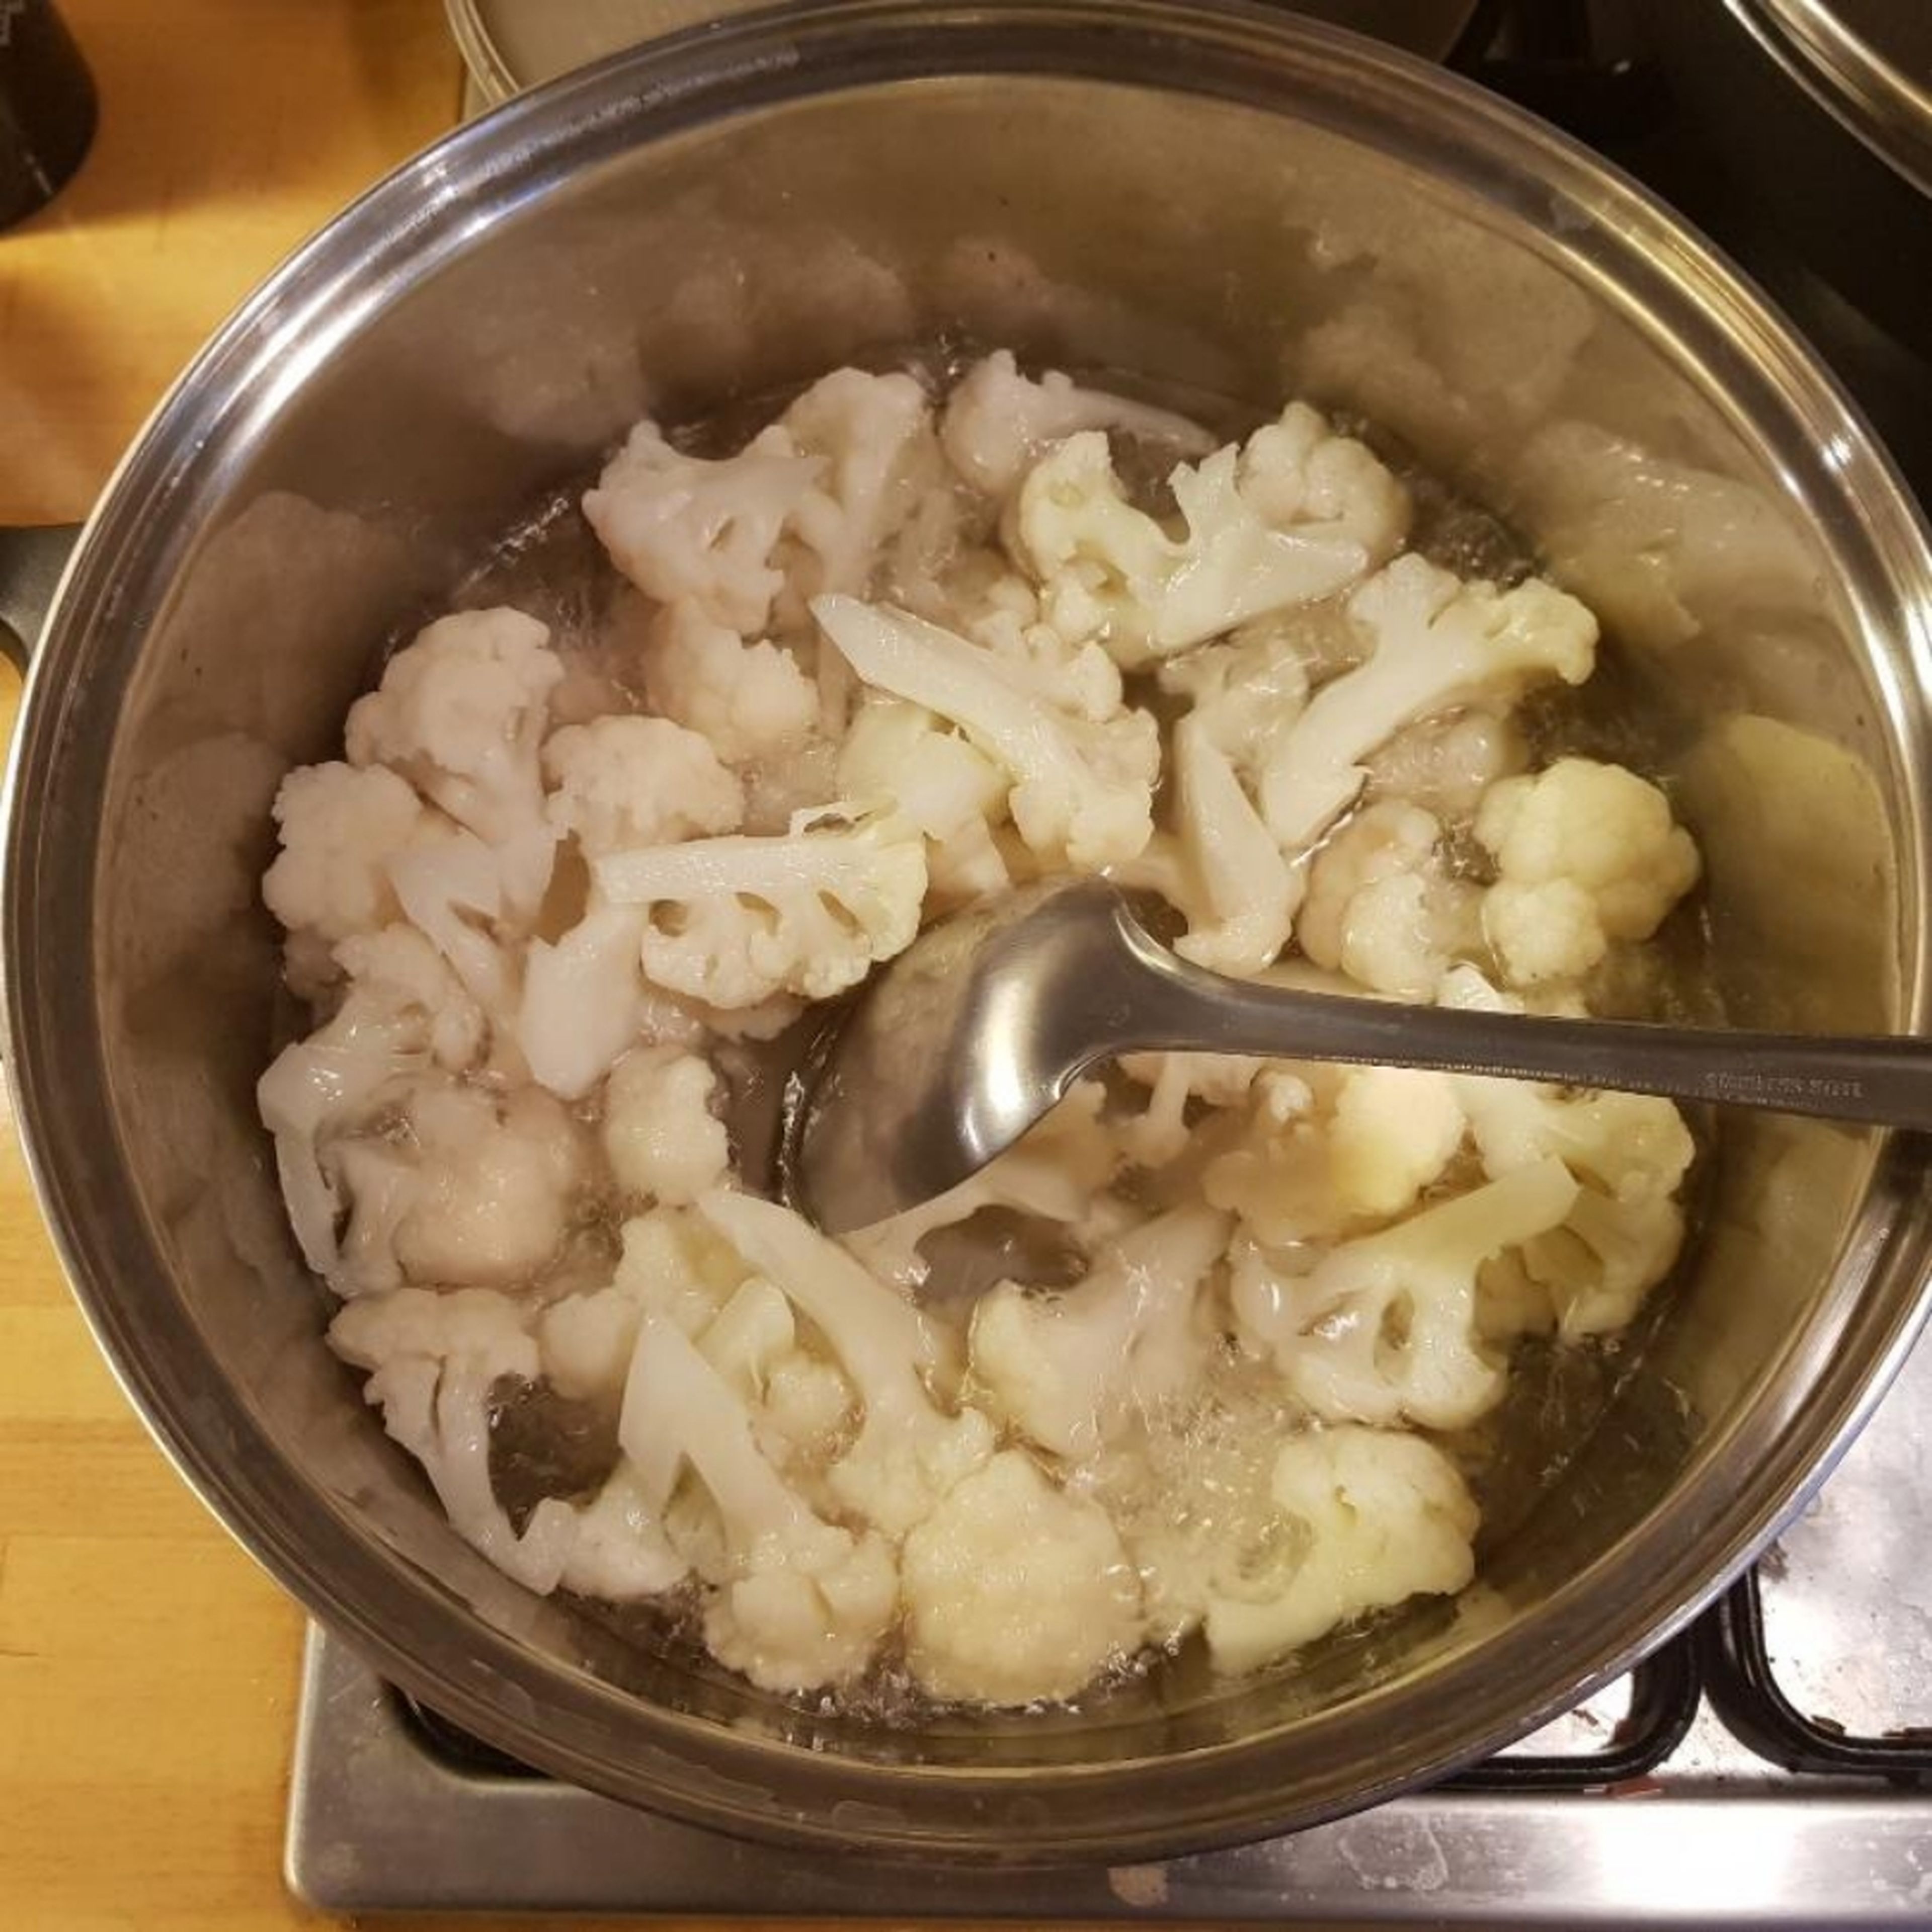 boil the cauliflower to make it soft